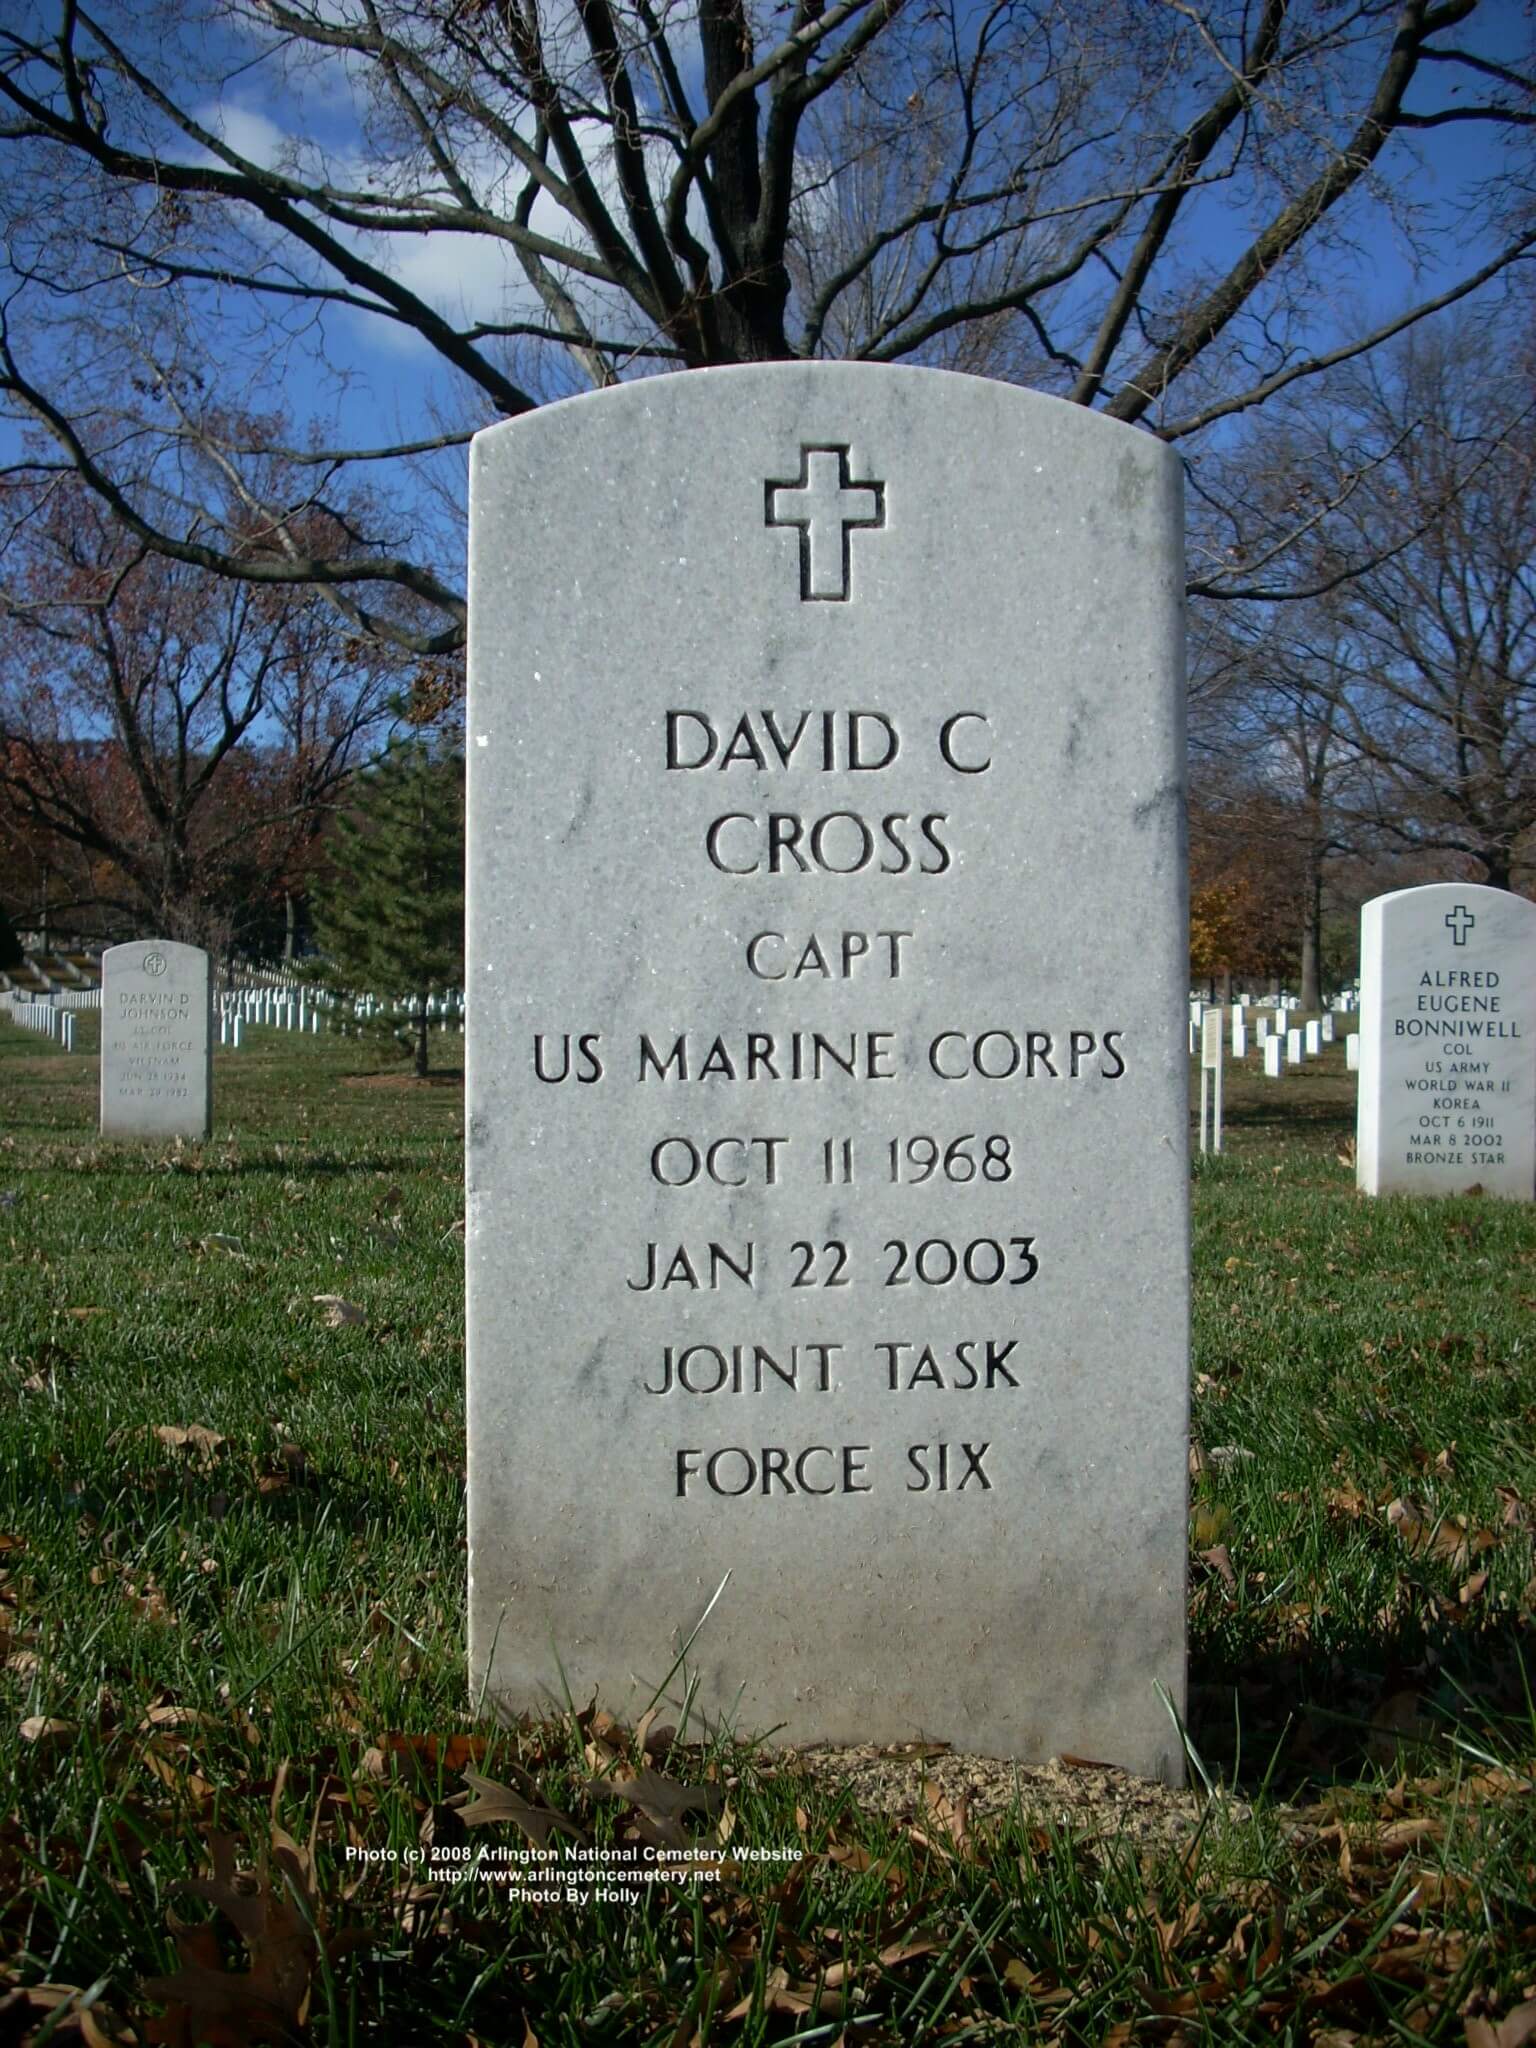 dccross-gravesite-photo-november-2008-002